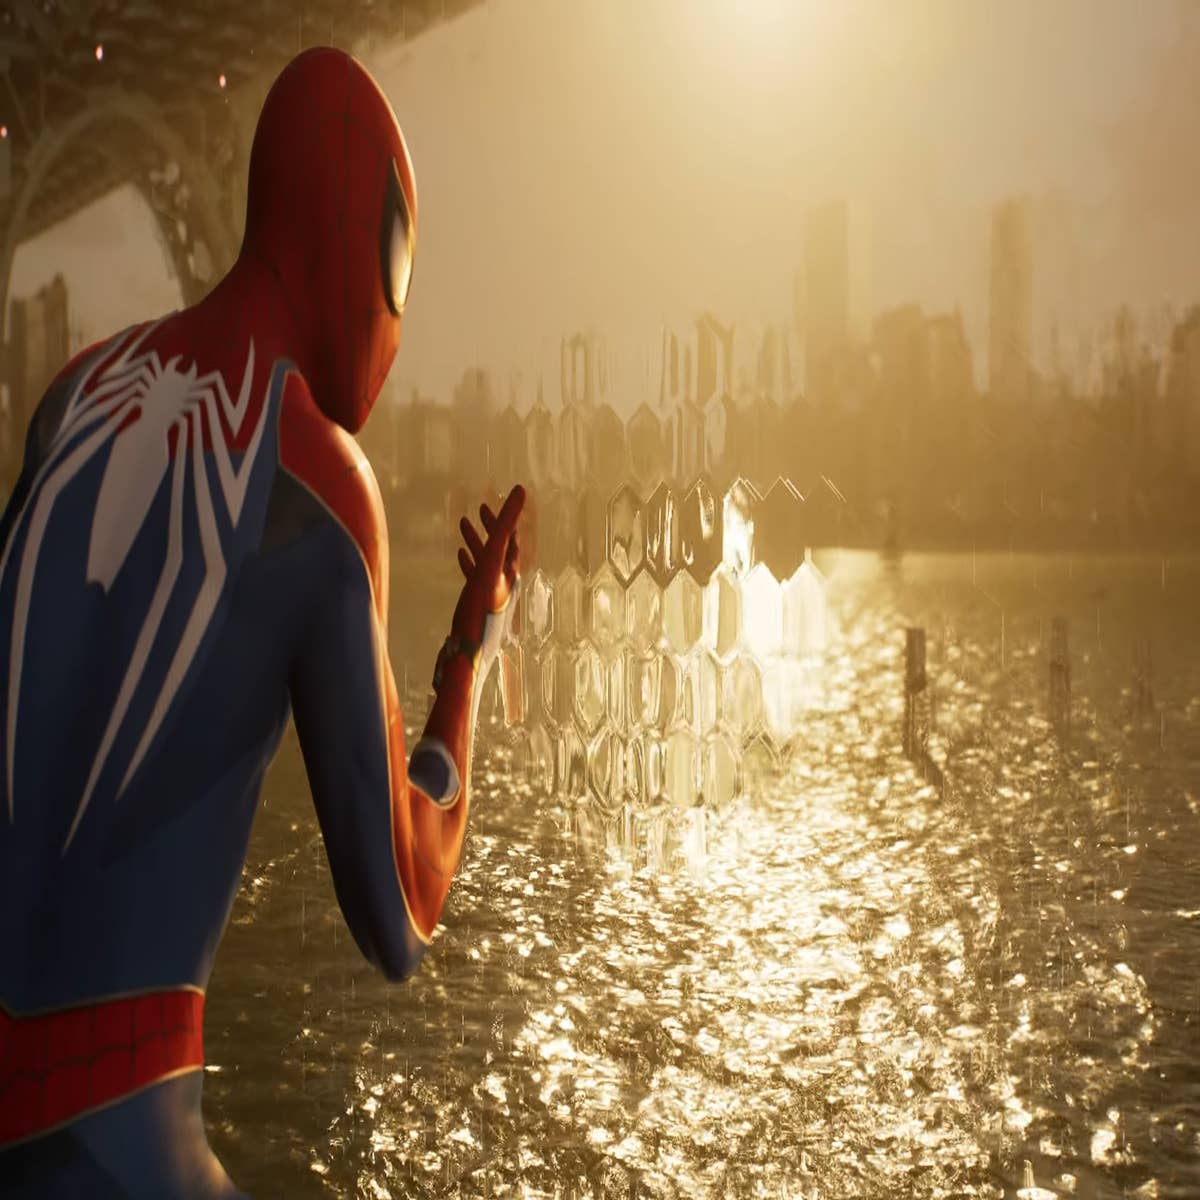 Marvel’s Spider-Man 2